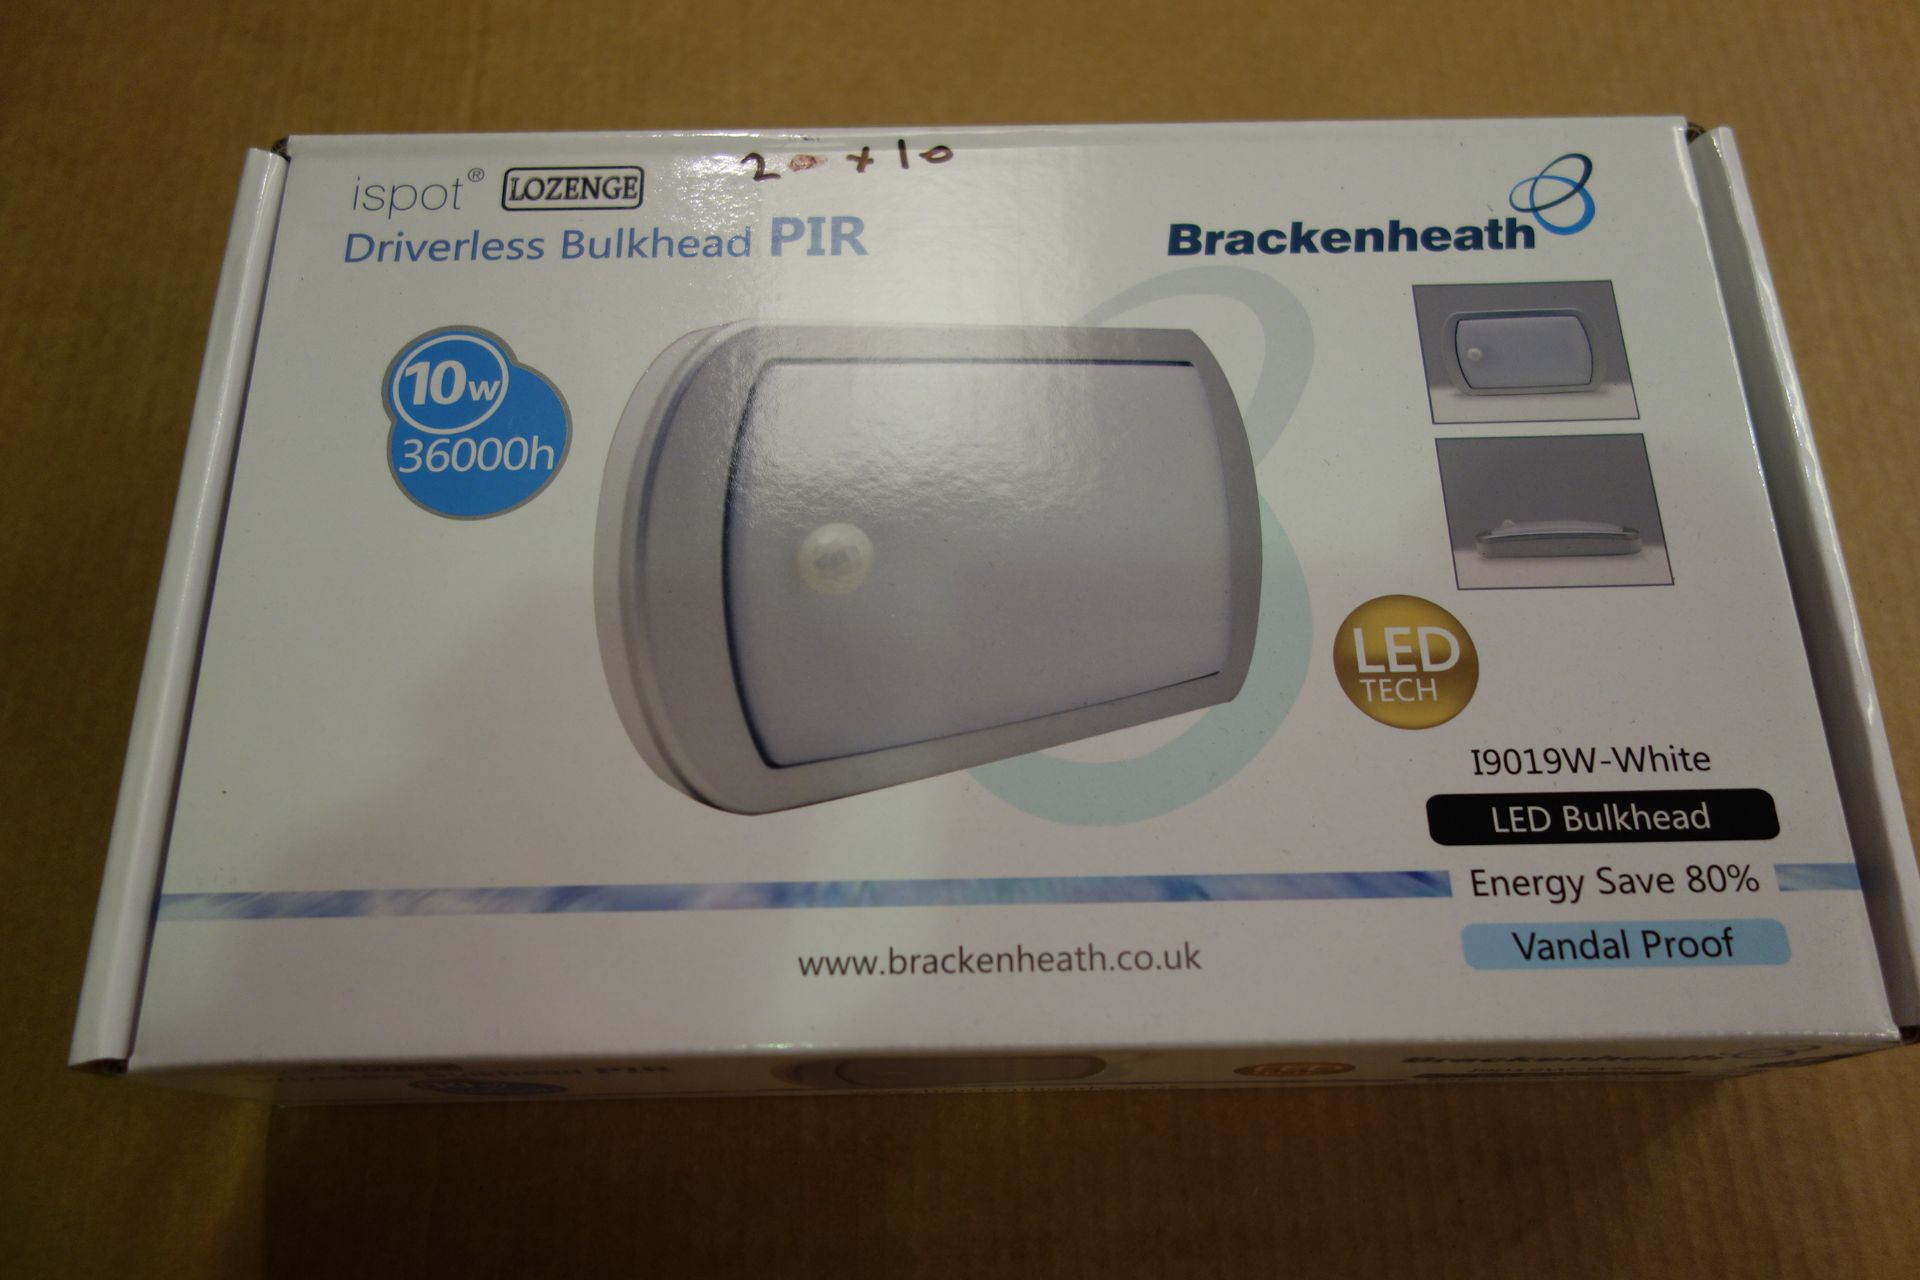 10 X Brakenheath I9019W-White Driverless Bulkhead With PIR Vandal Proof 10W